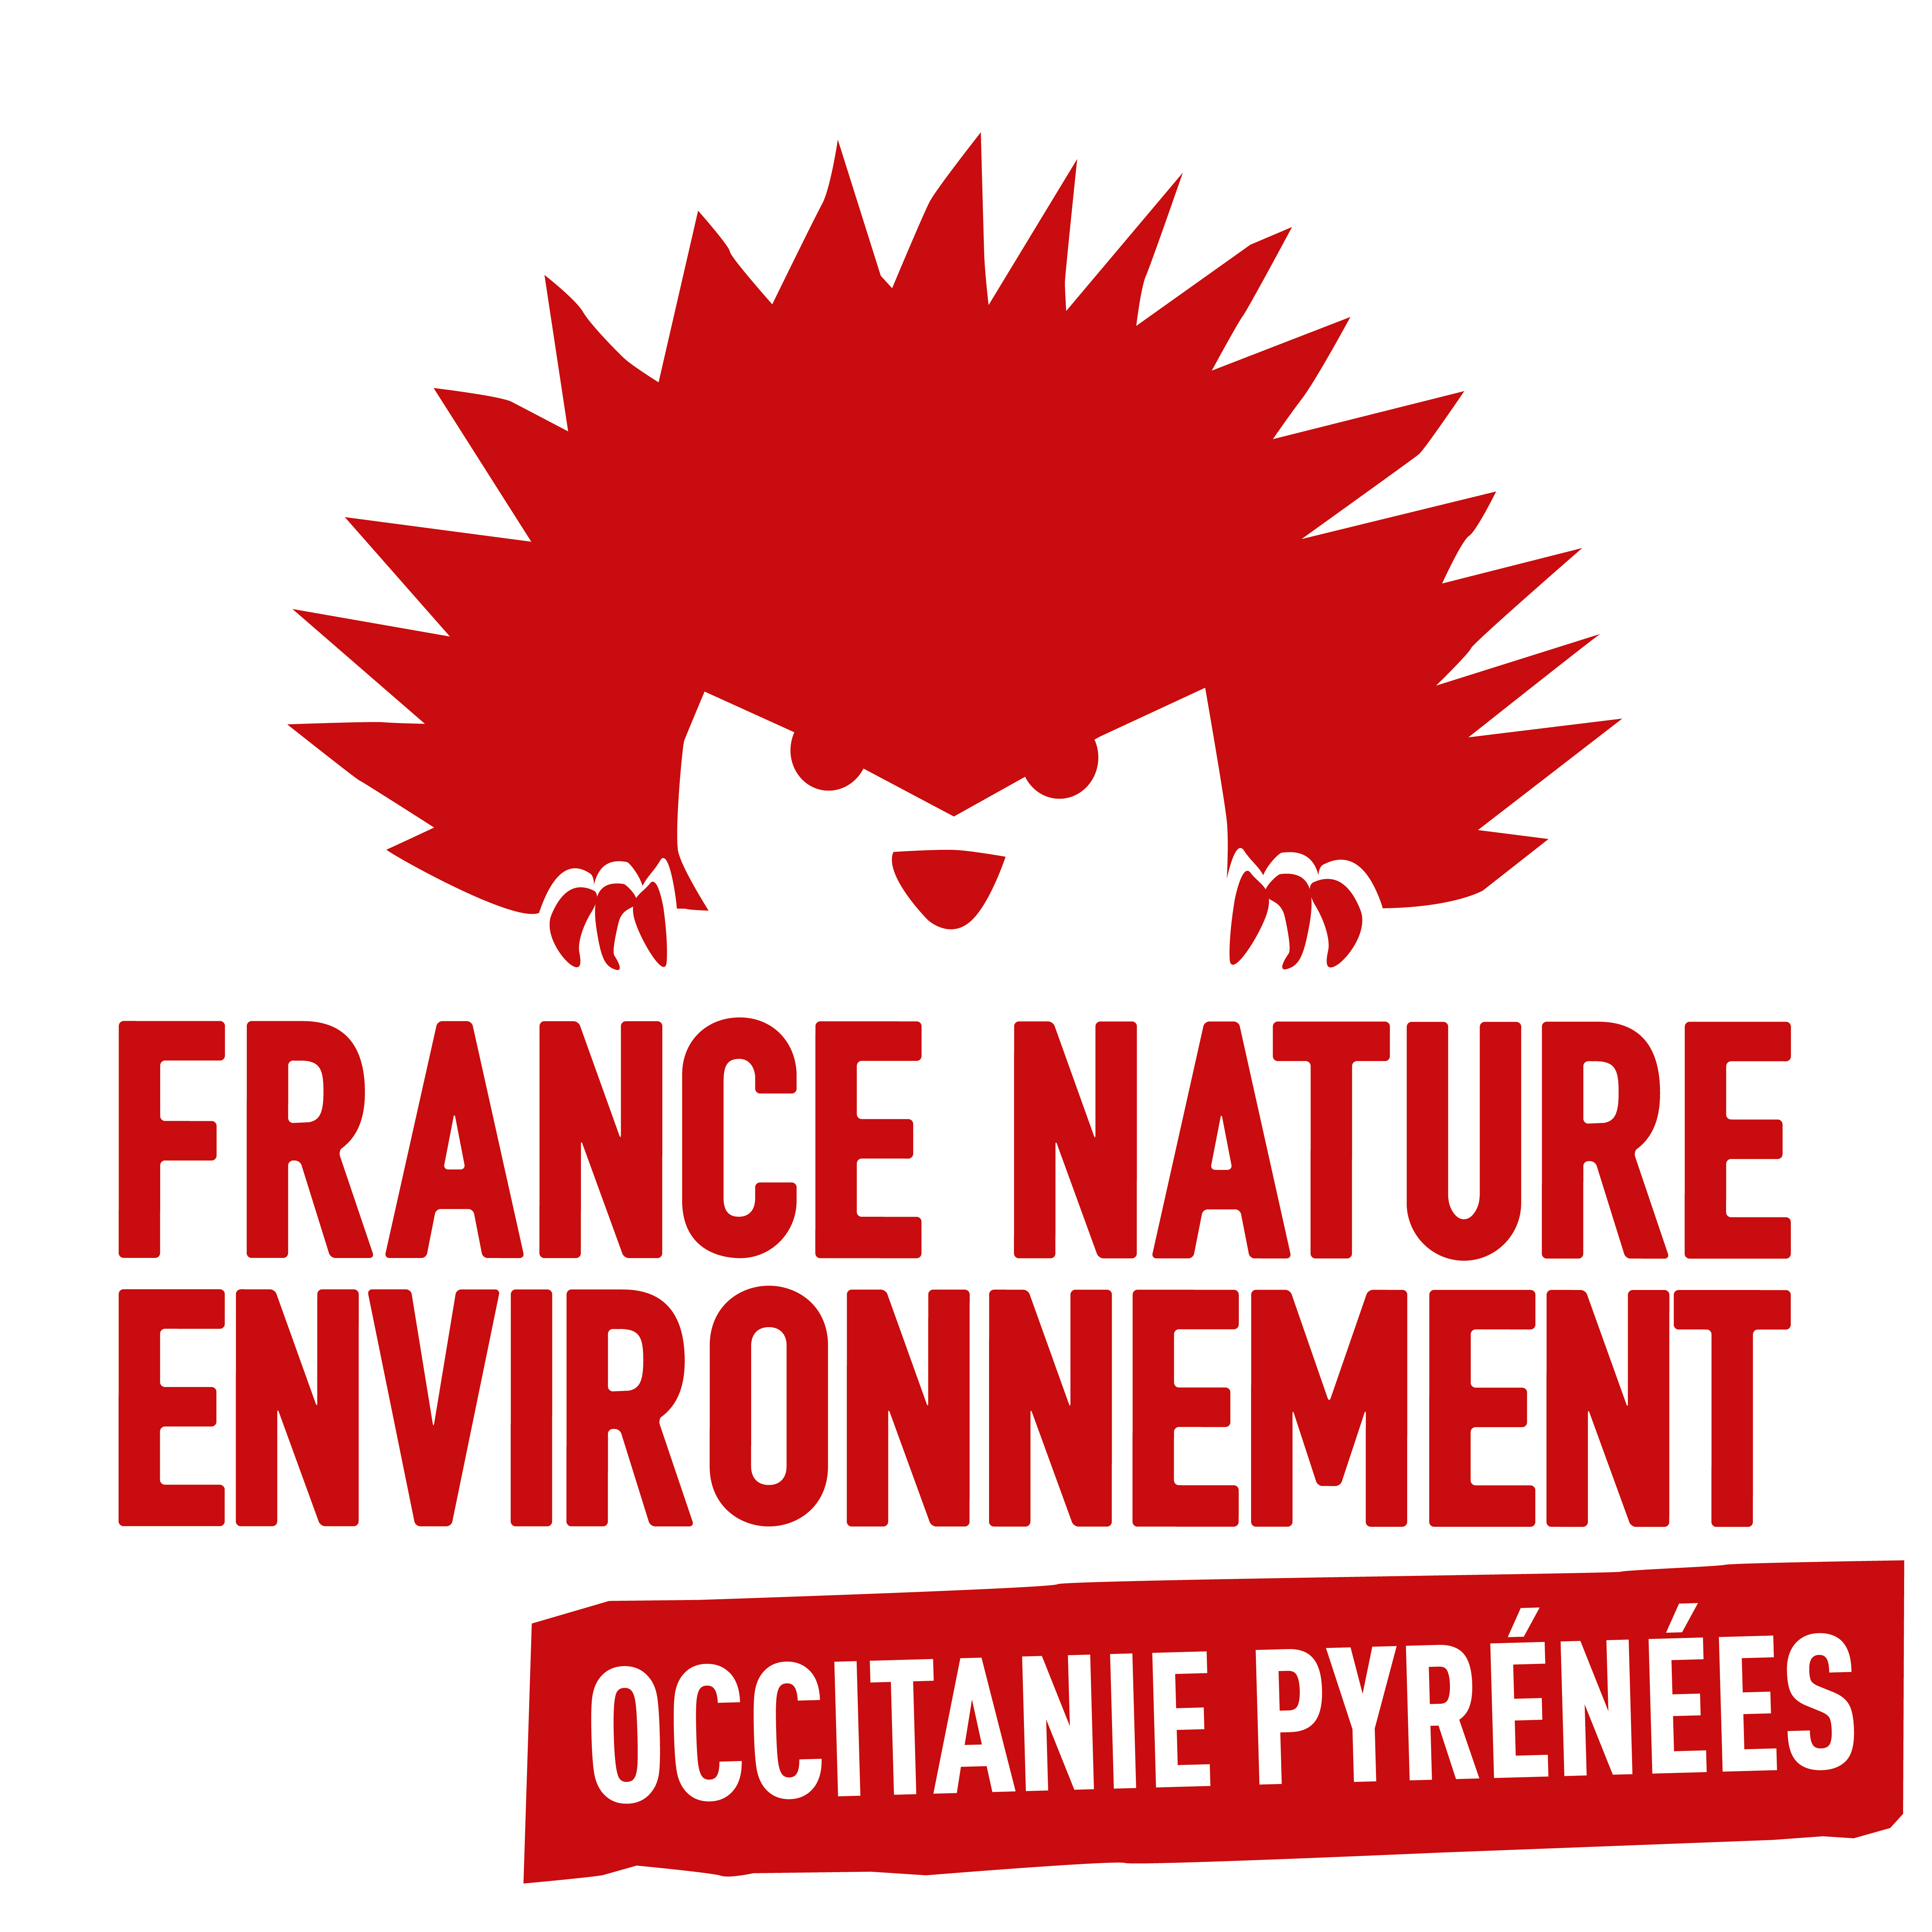 FRANCE NATURE ENVIRONNEMENT OCCITANIE PYRENEES